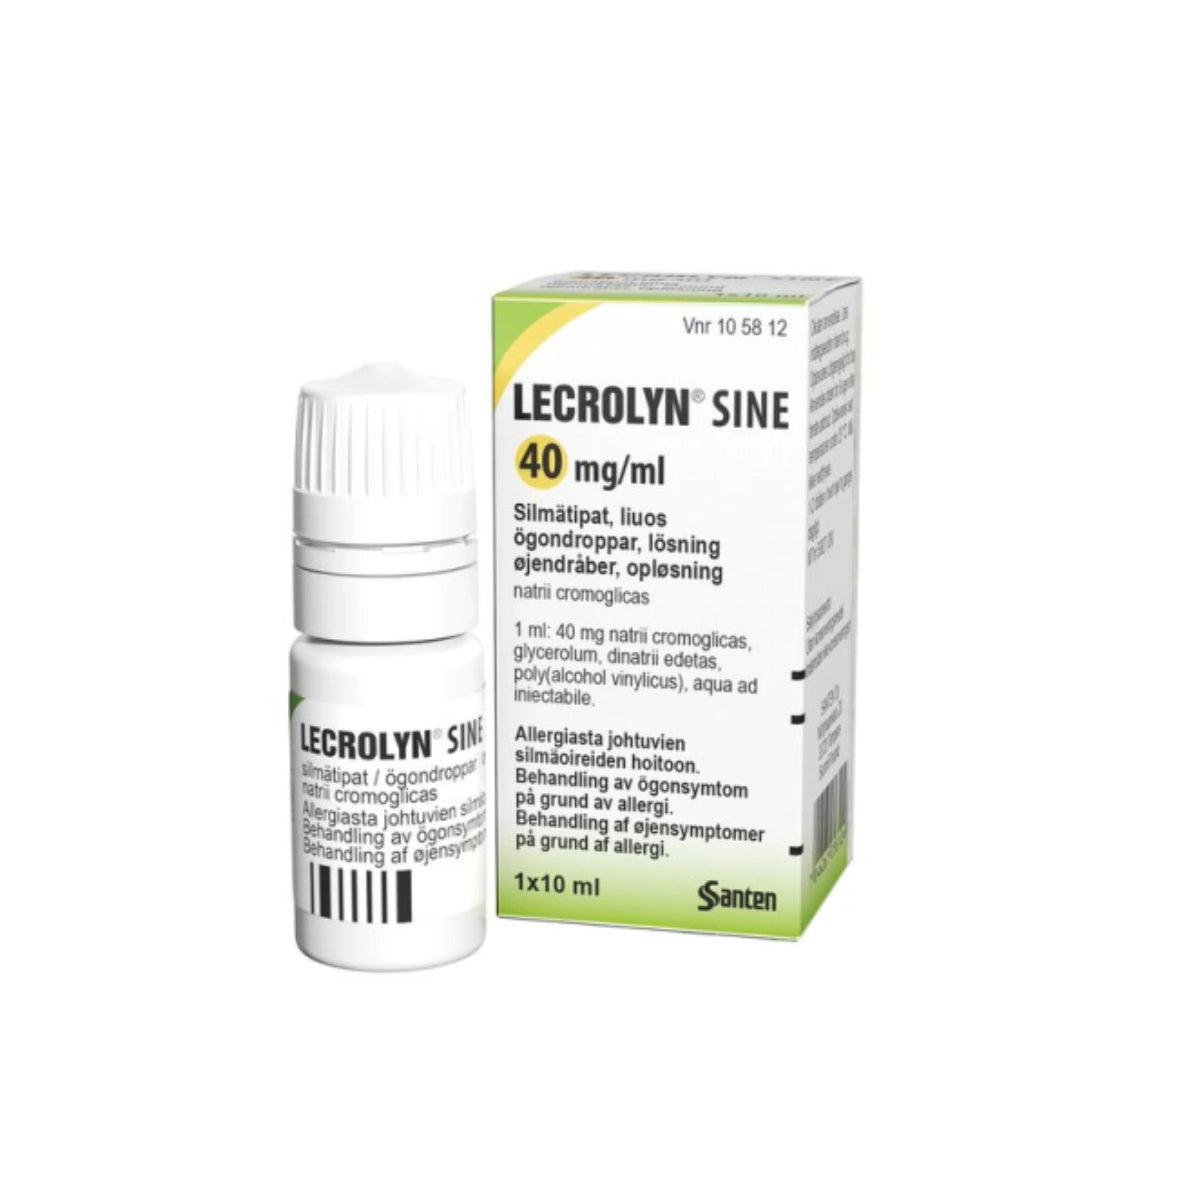 LECROLYN SINE 40 mg/ml silmätipat, liuos 10 ml